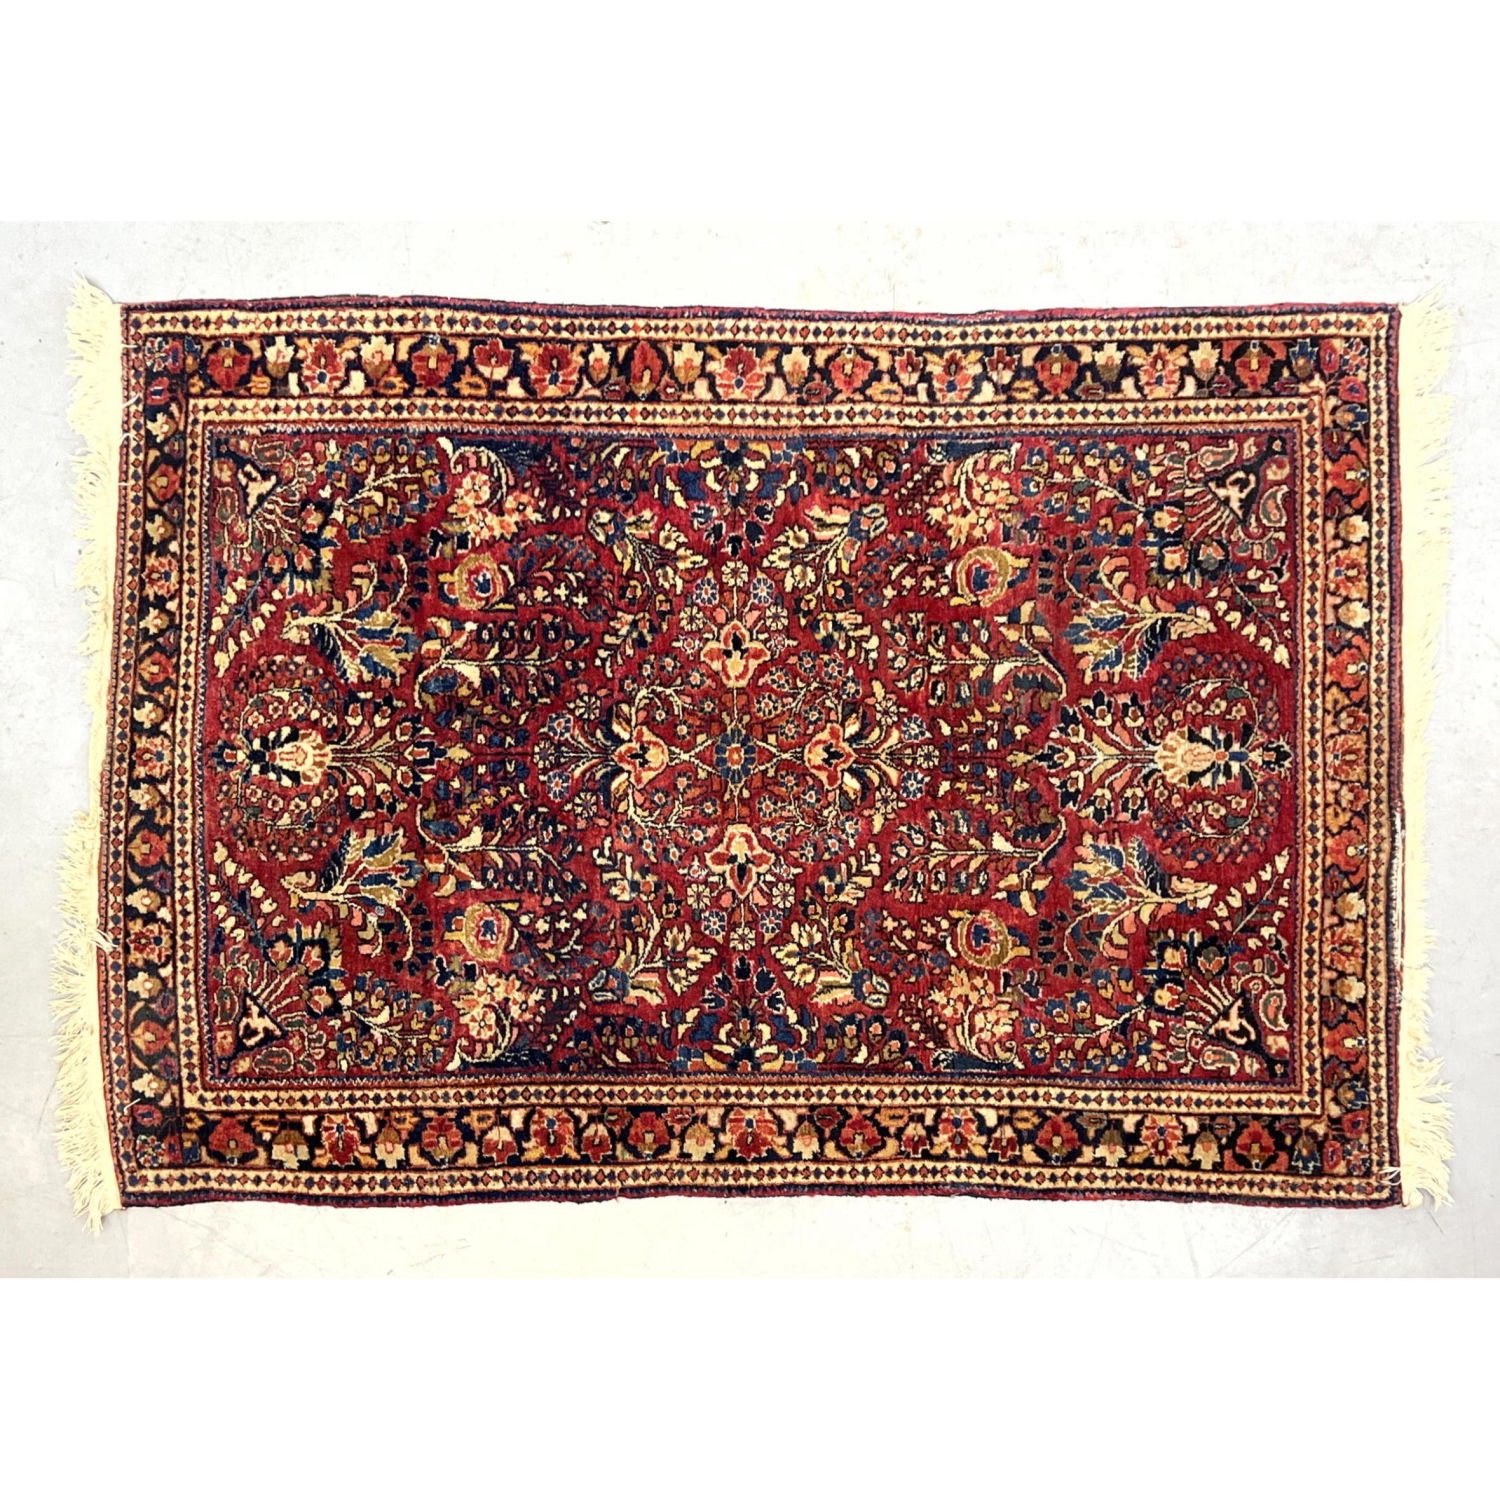 5' x 3'3" Handmade Oriental Carpet